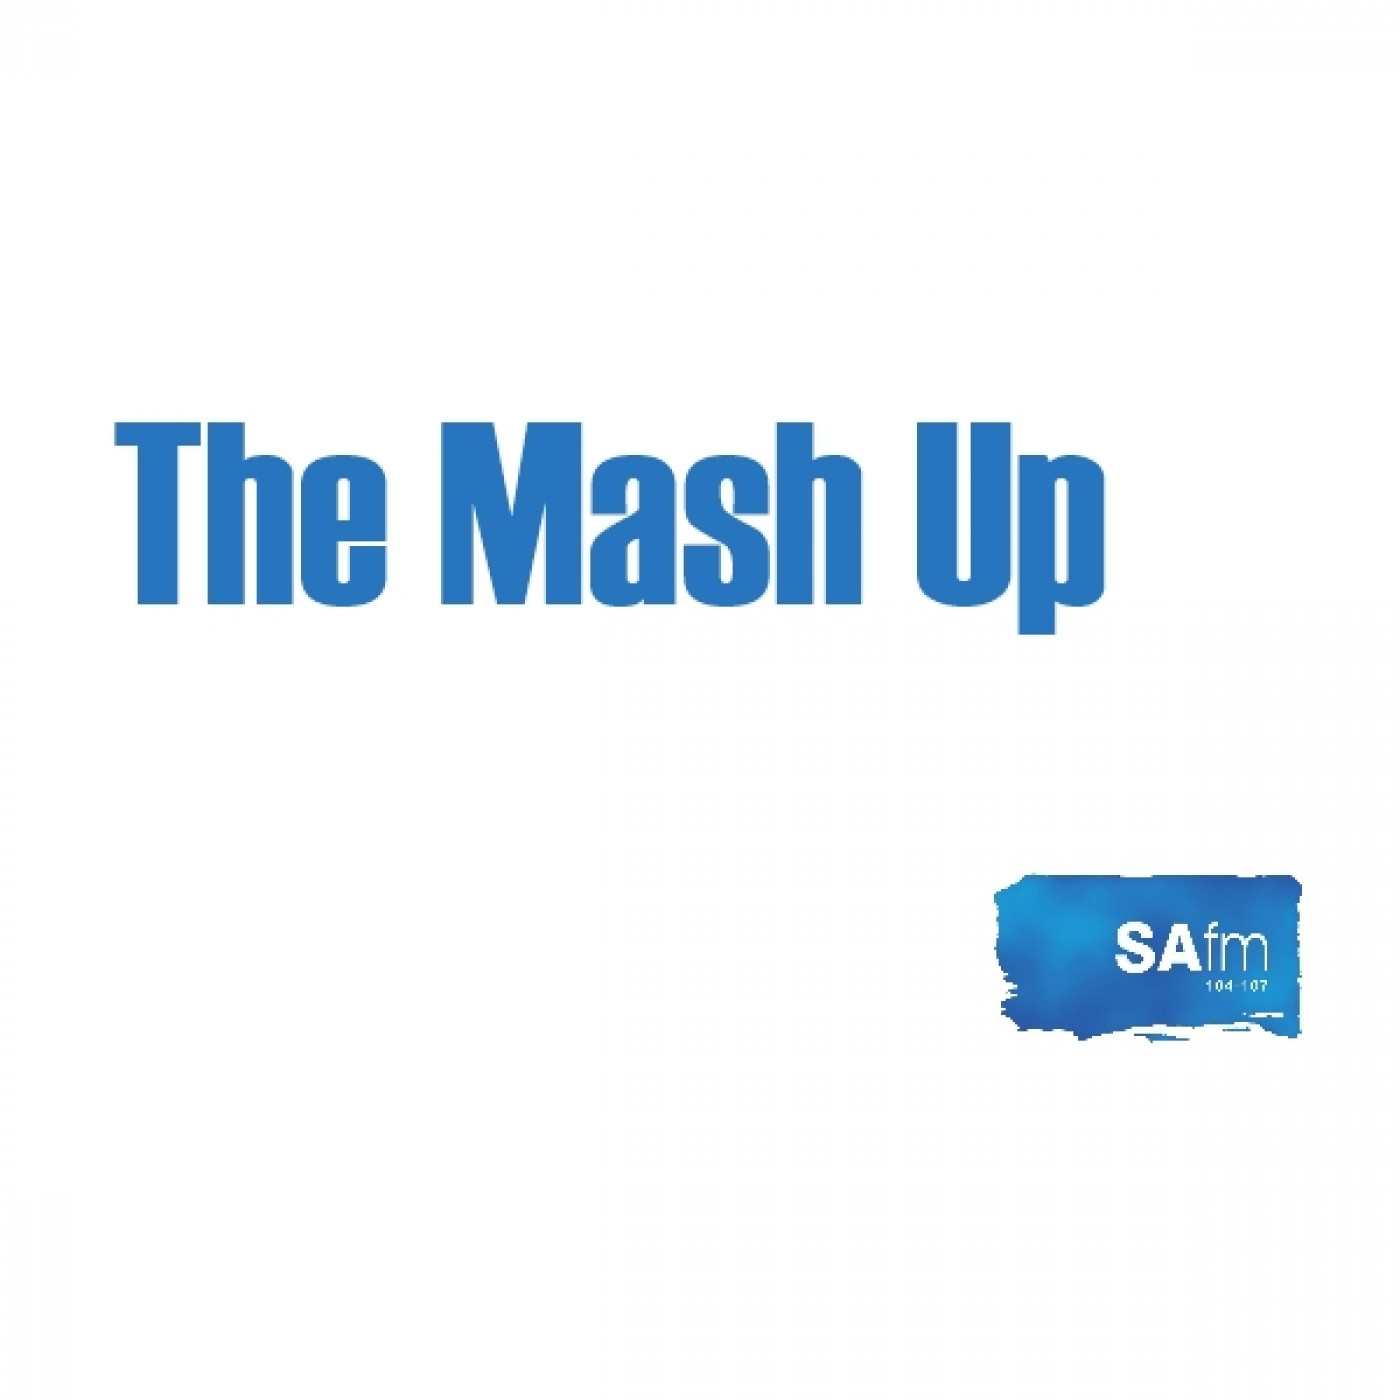 The Mash up - 10 February 2018 PART 3